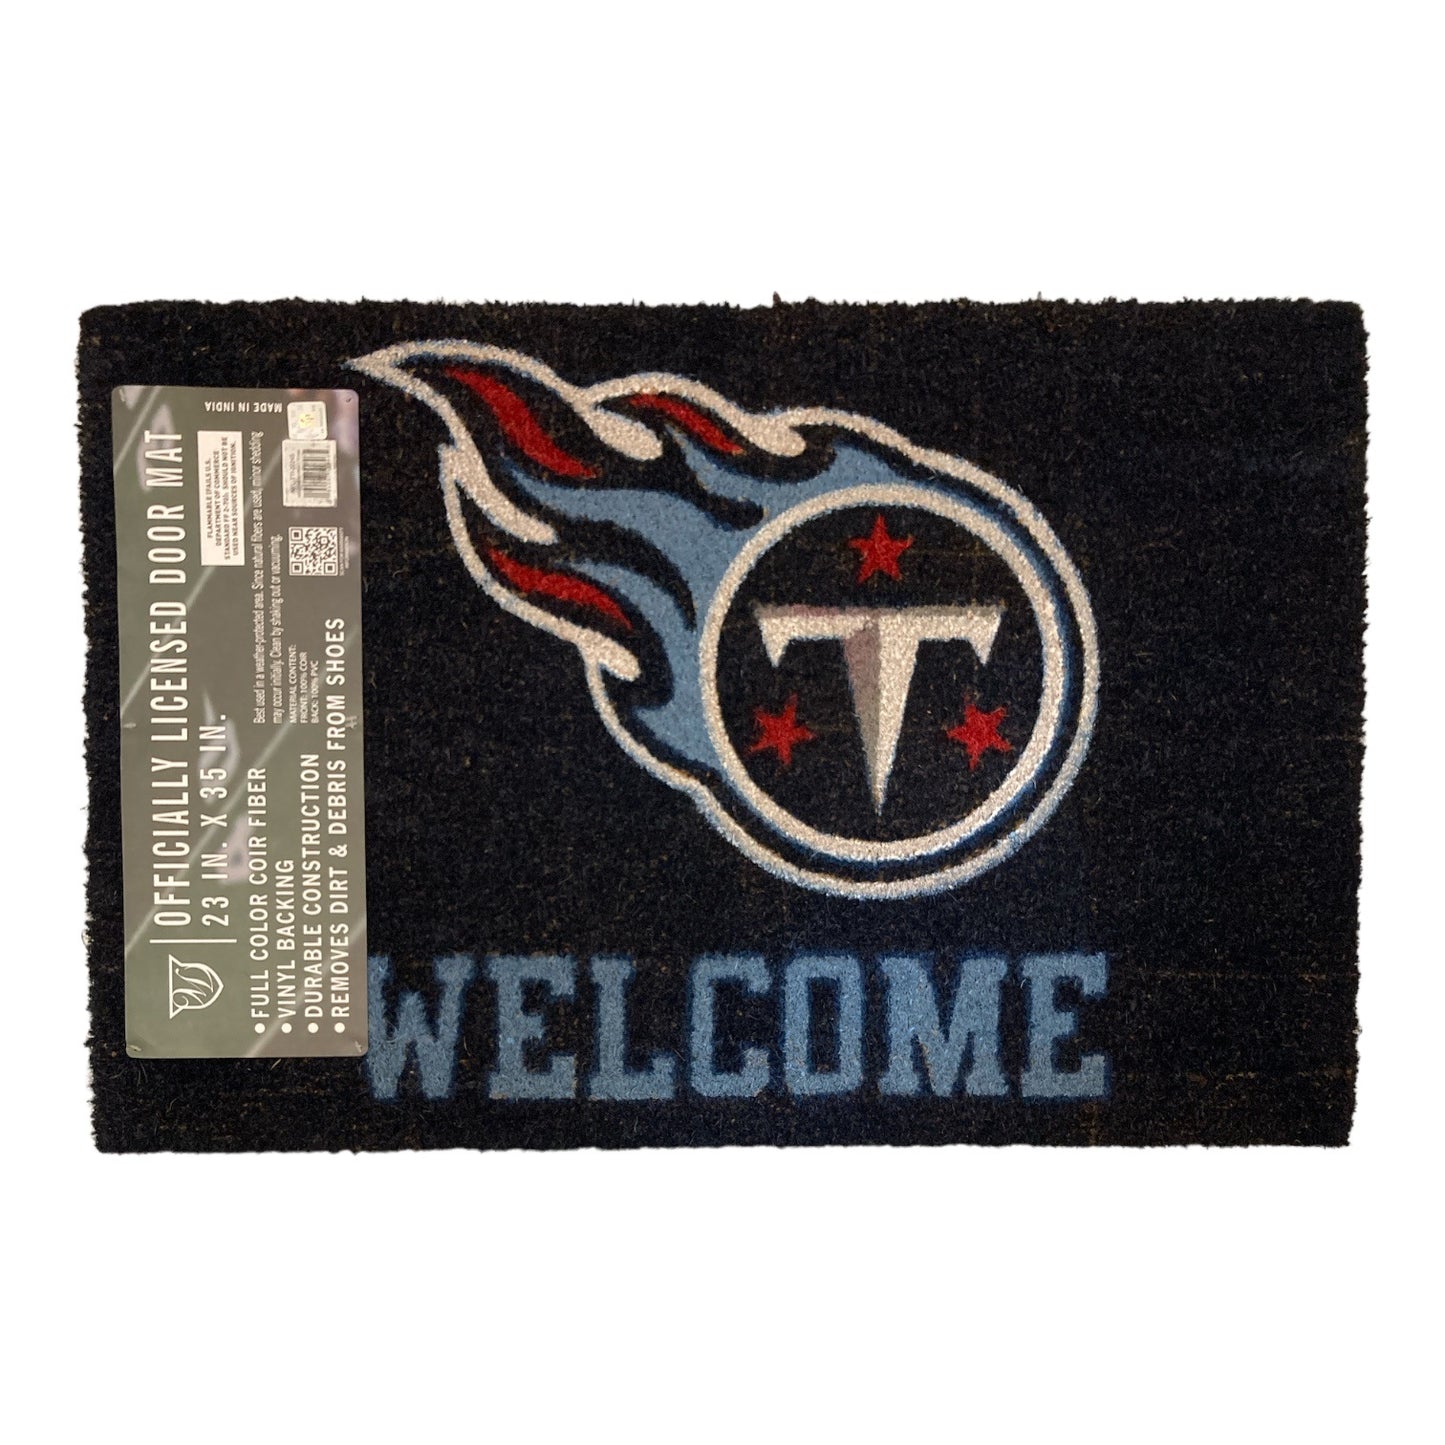 Officially Licensed NFL Coir Fiber Welcome Door Mat, Tennessee Titans 23"x35"